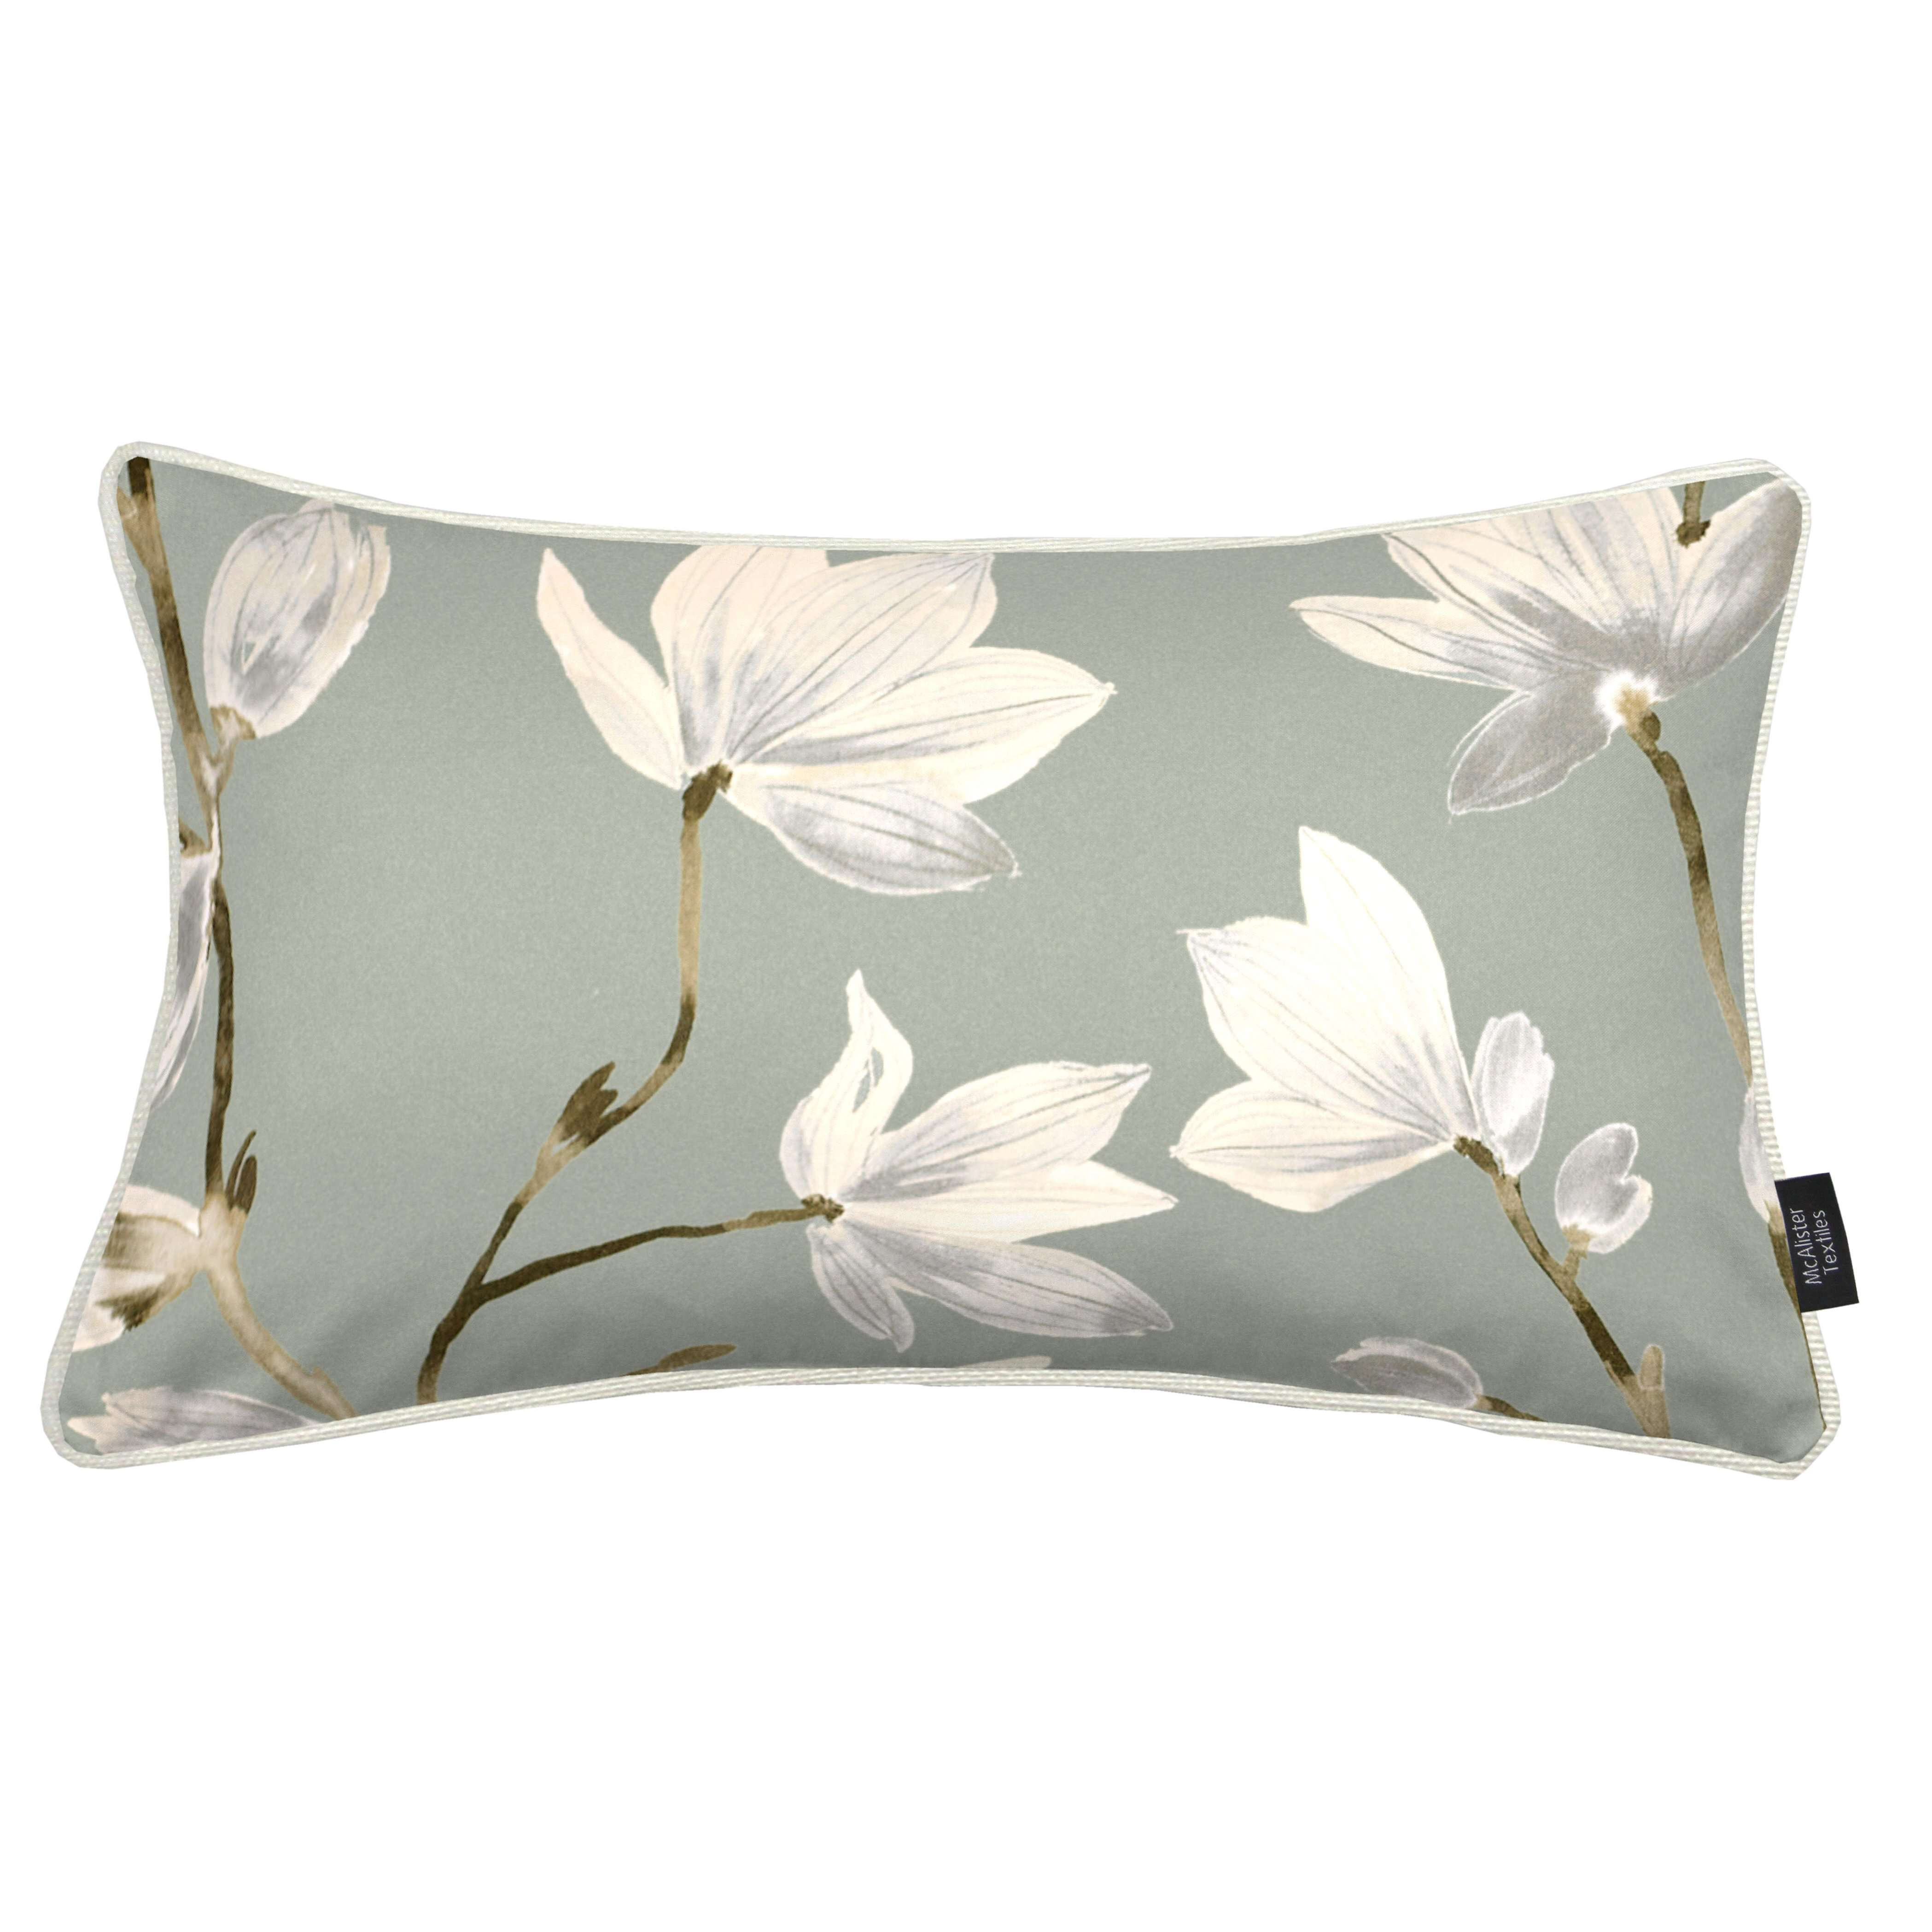 Magnolia Duck Egg Floral Cotton Print Pillows, Cover Only / 50cm x 30cm